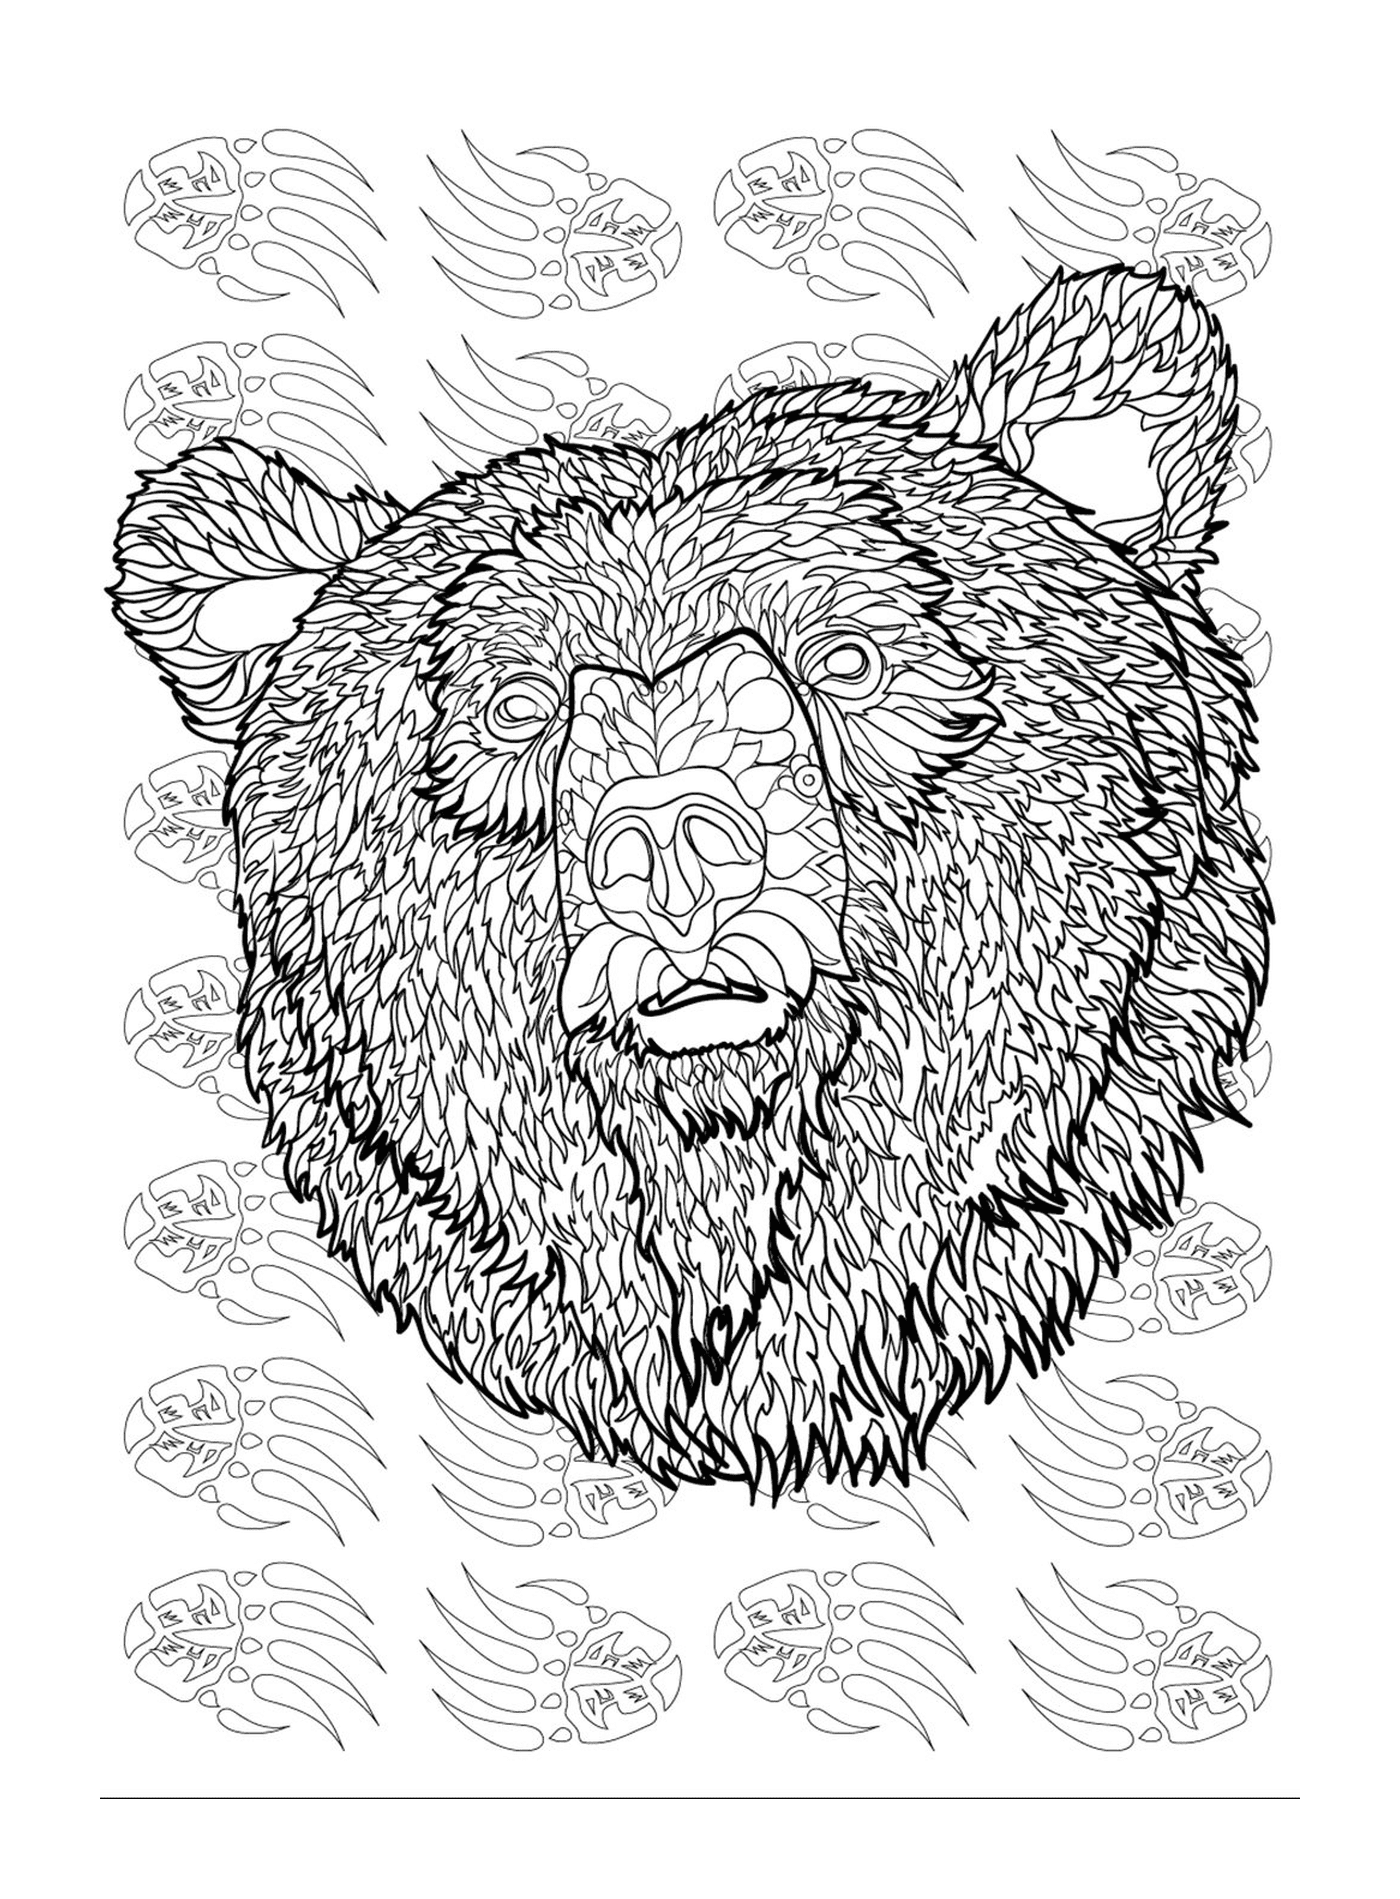  La cabeza de un oso 